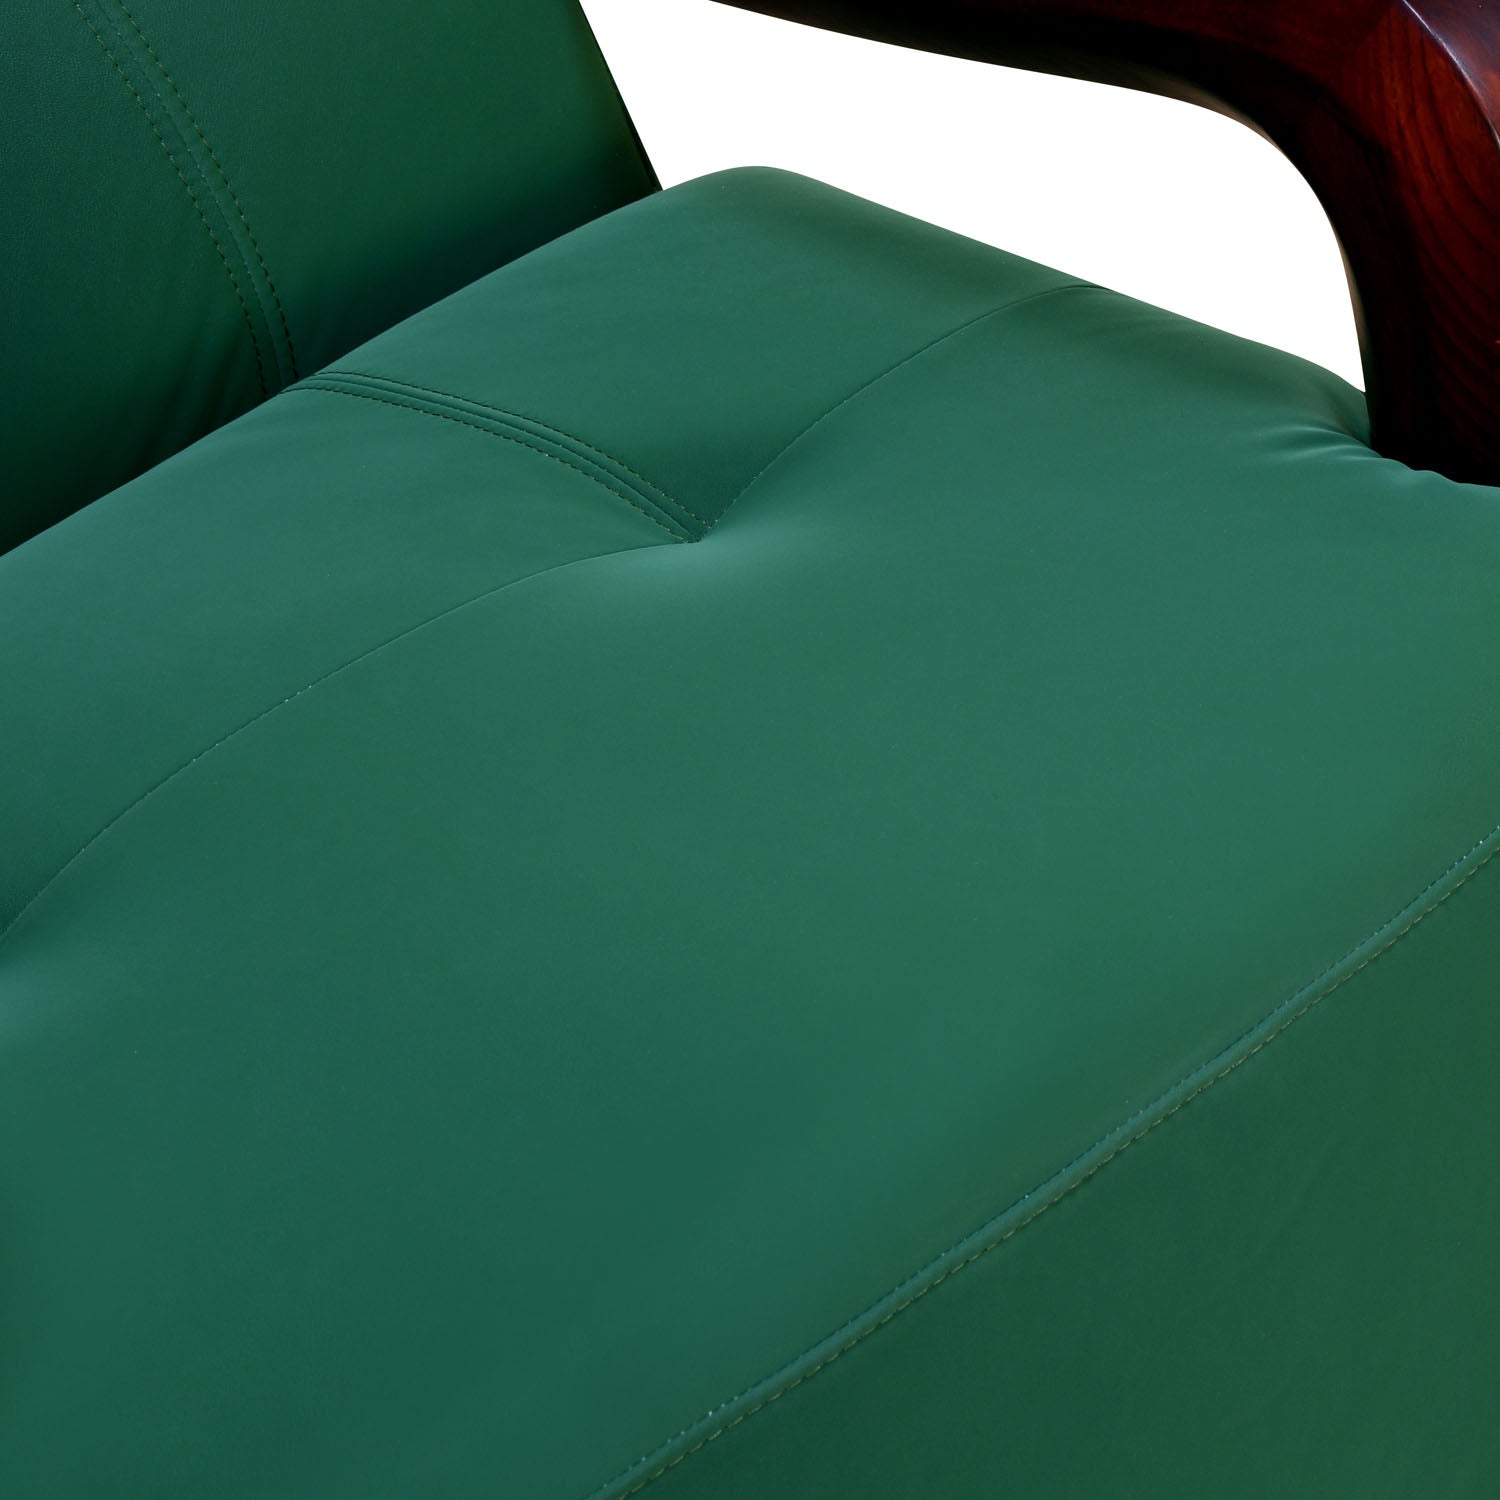 Rinella Rocker & Swivel Arm Chair (Forest Green)